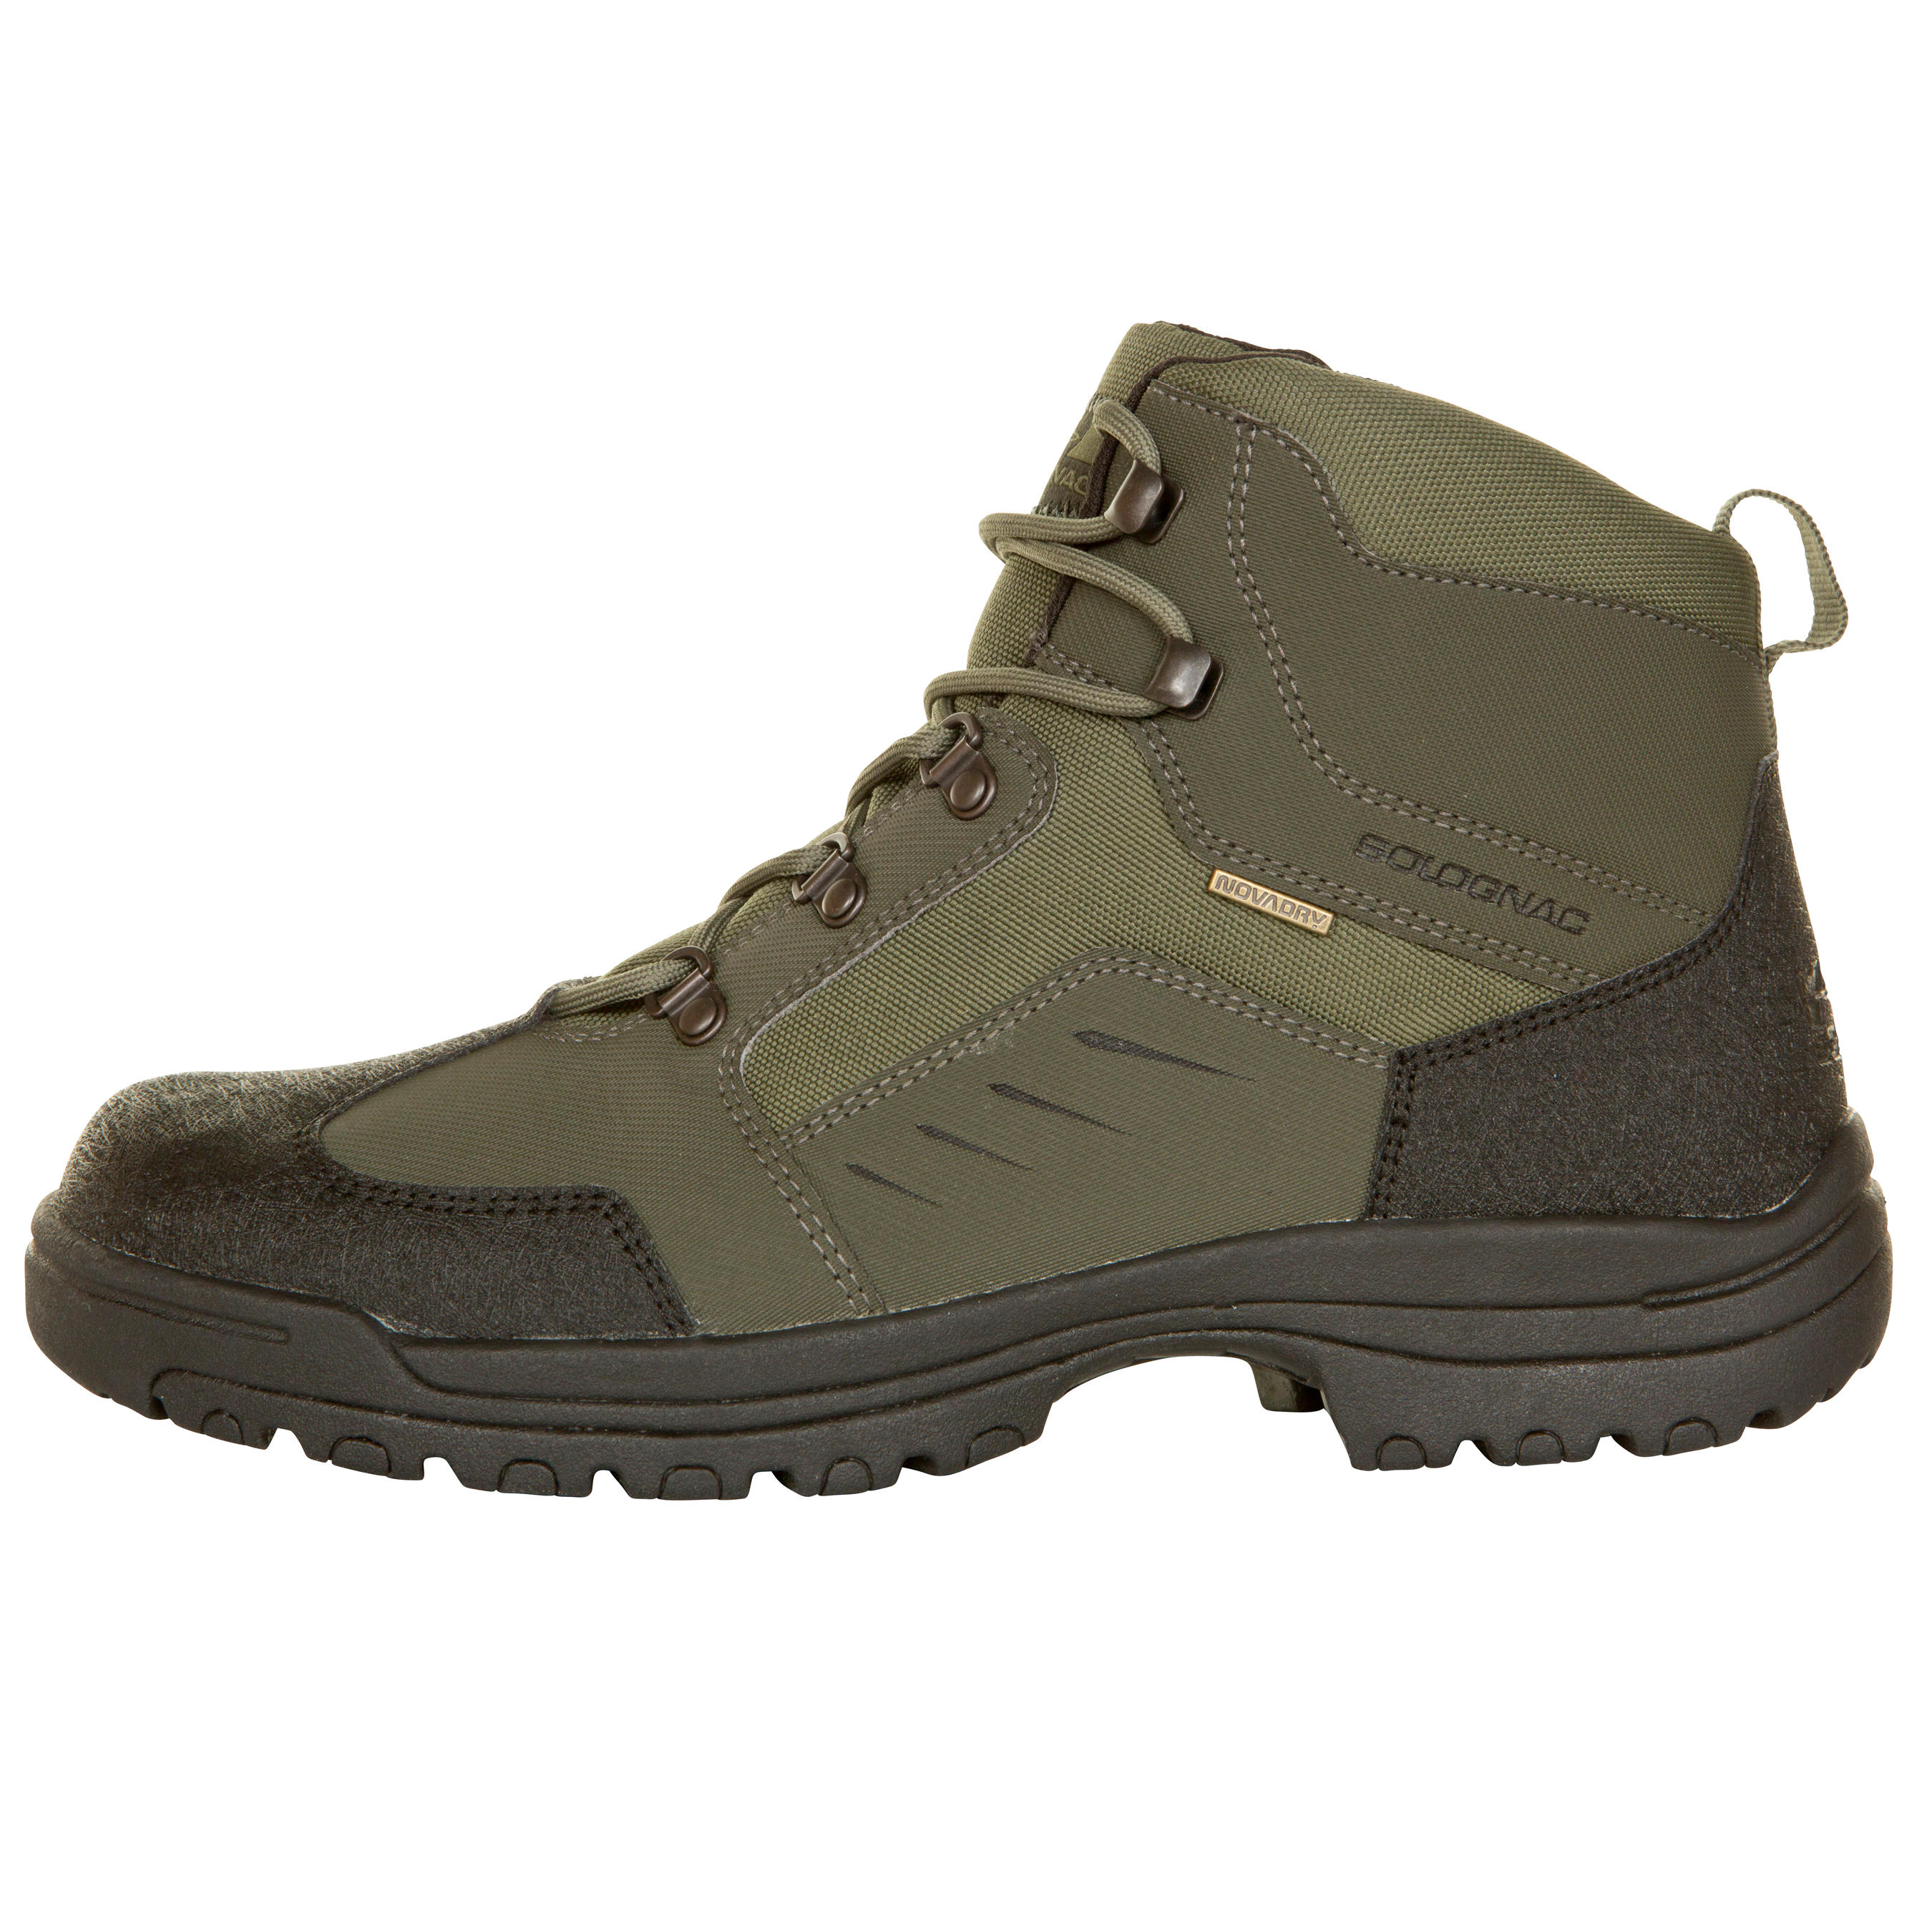 waterproof hiking hunting boots